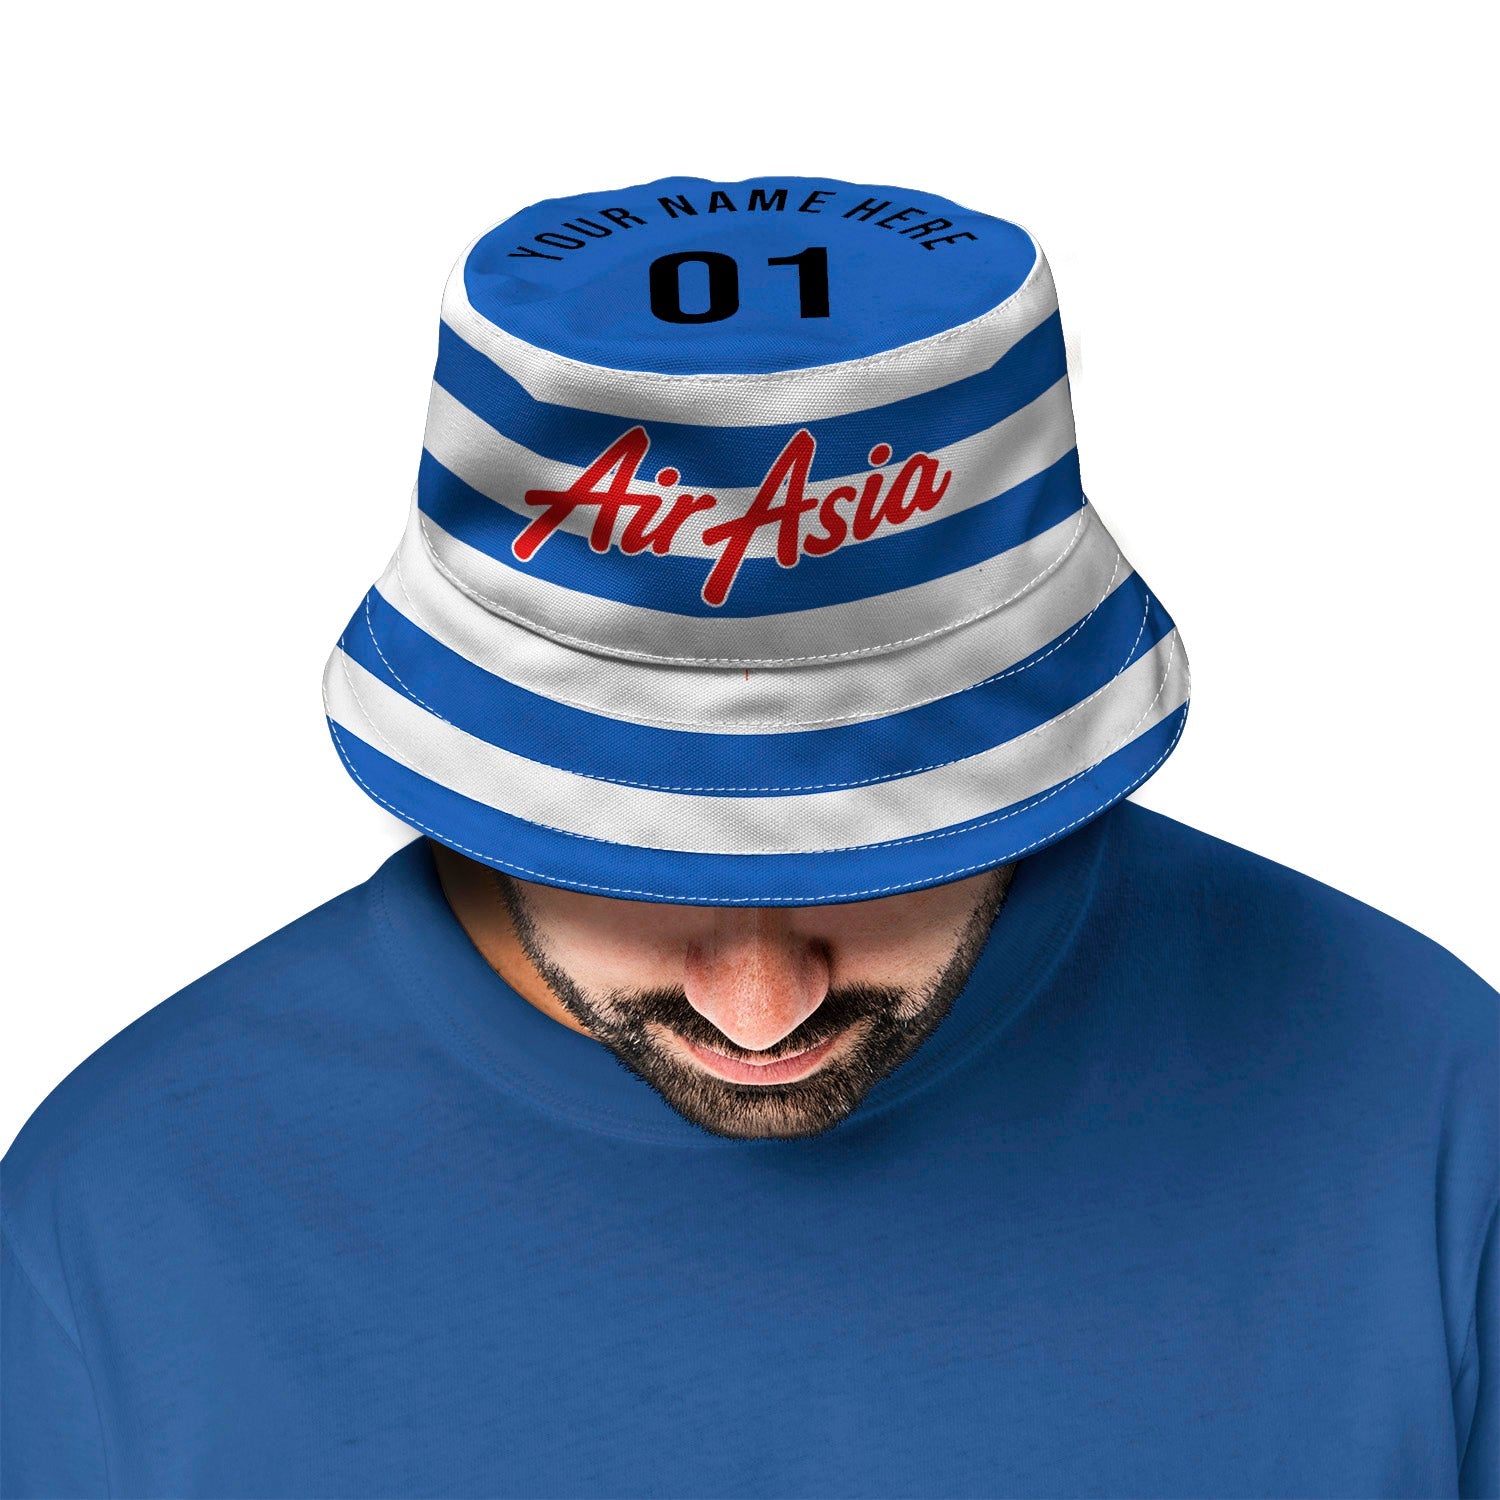 The Hoops 2015 Home - Retro Bucket Hat